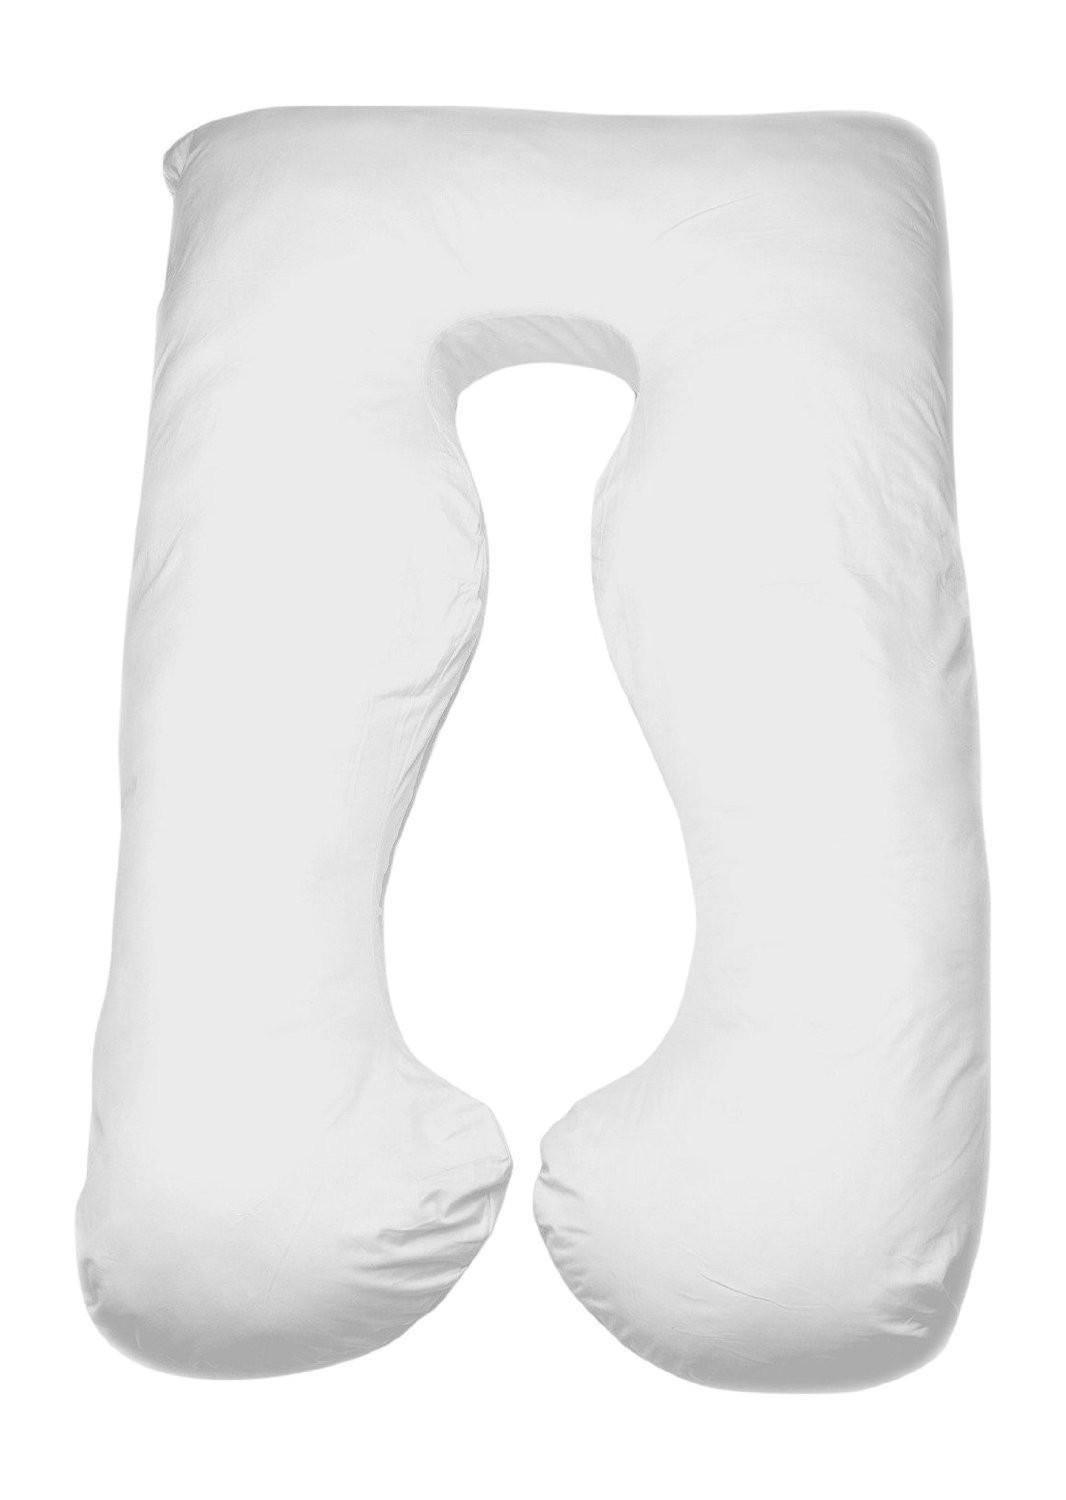 Full Body Pillow for Body Nursing & Pregnant Women - Belly & Back Support 100% Pillow Cover U Shaped